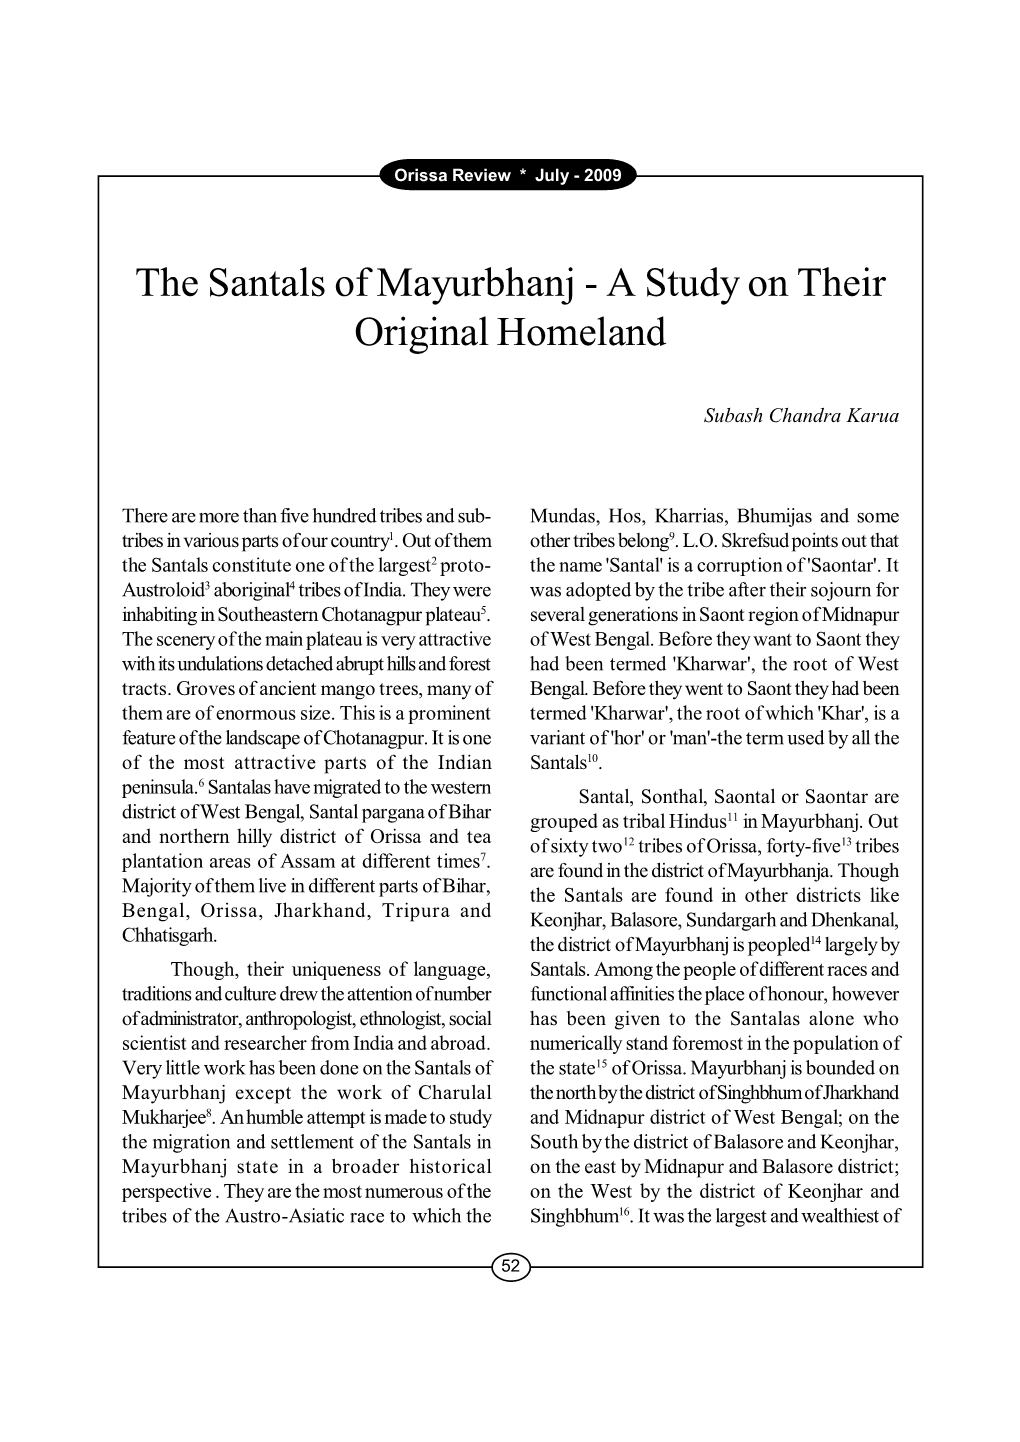 The Santals of Mayurbhanj - a Study on Their Original Homeland